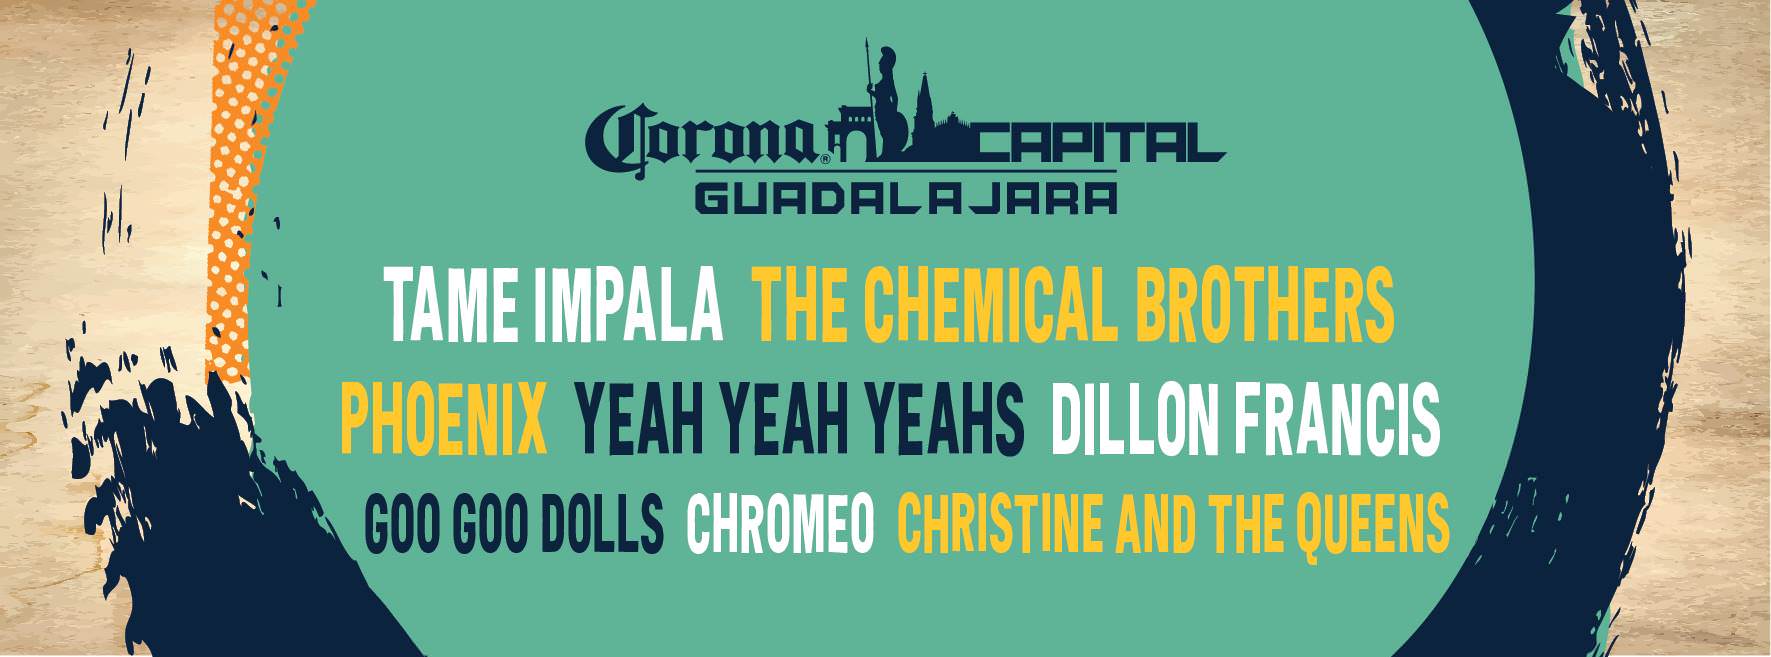 Lineup Corona Capital GDL 2019